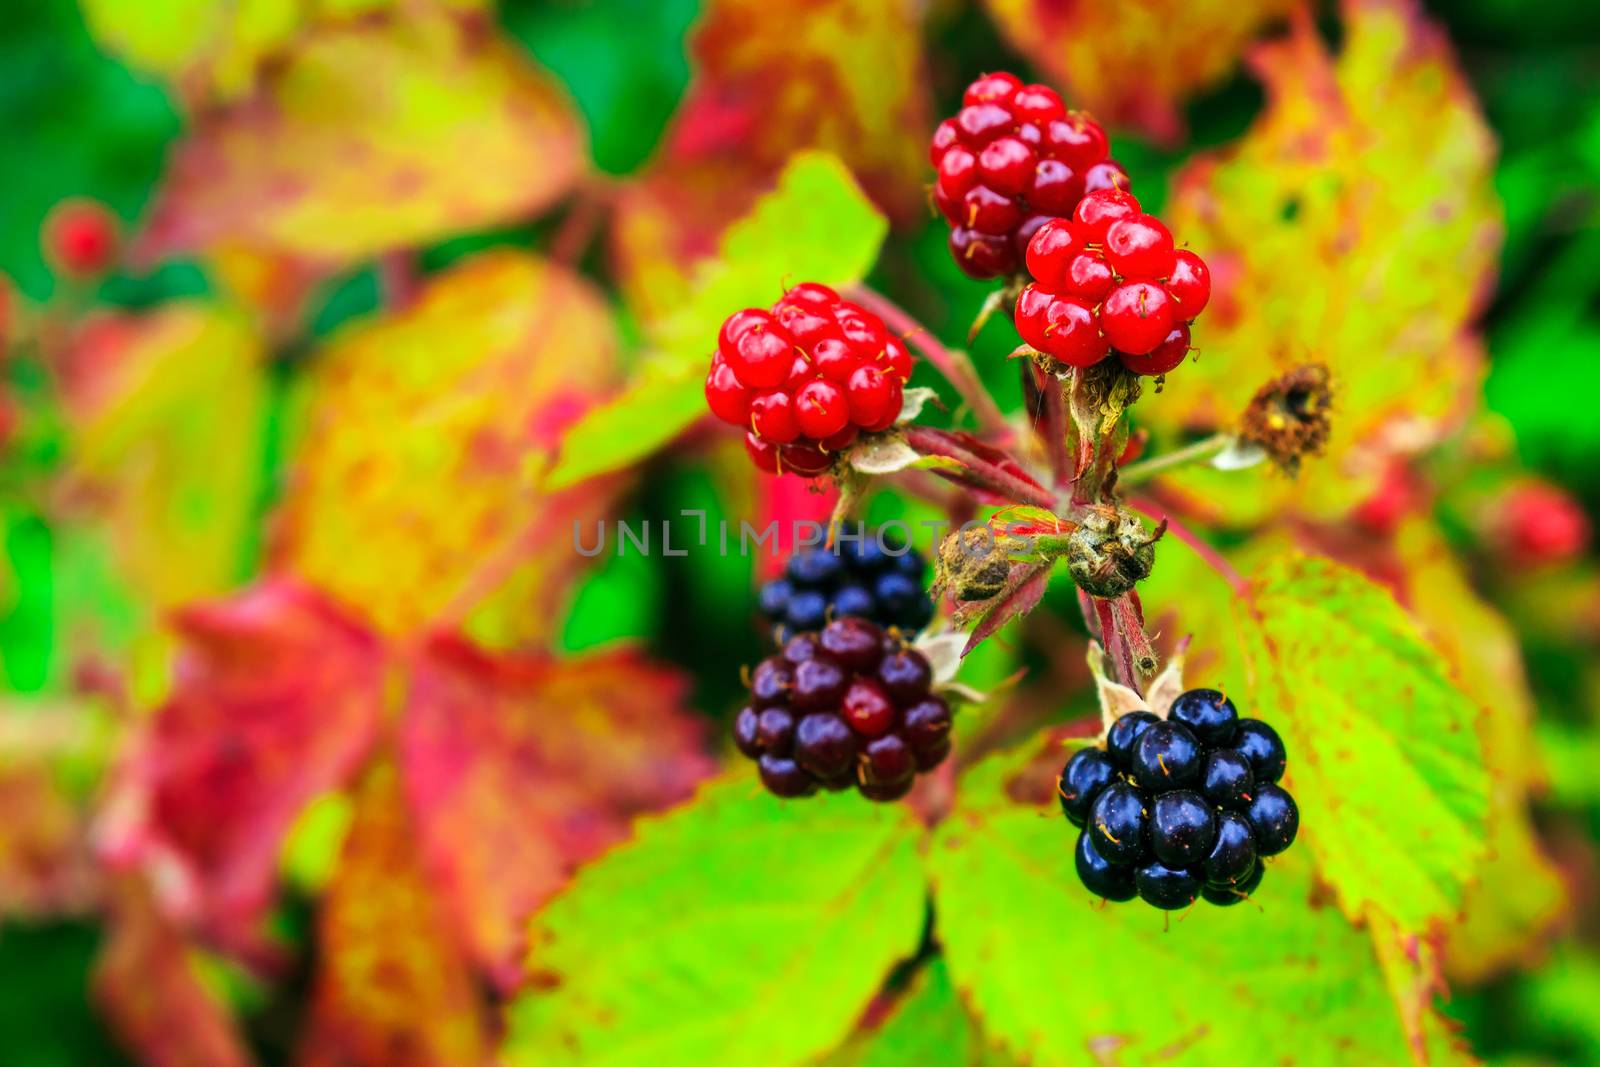 wild blackberry ripening process by Pellinni